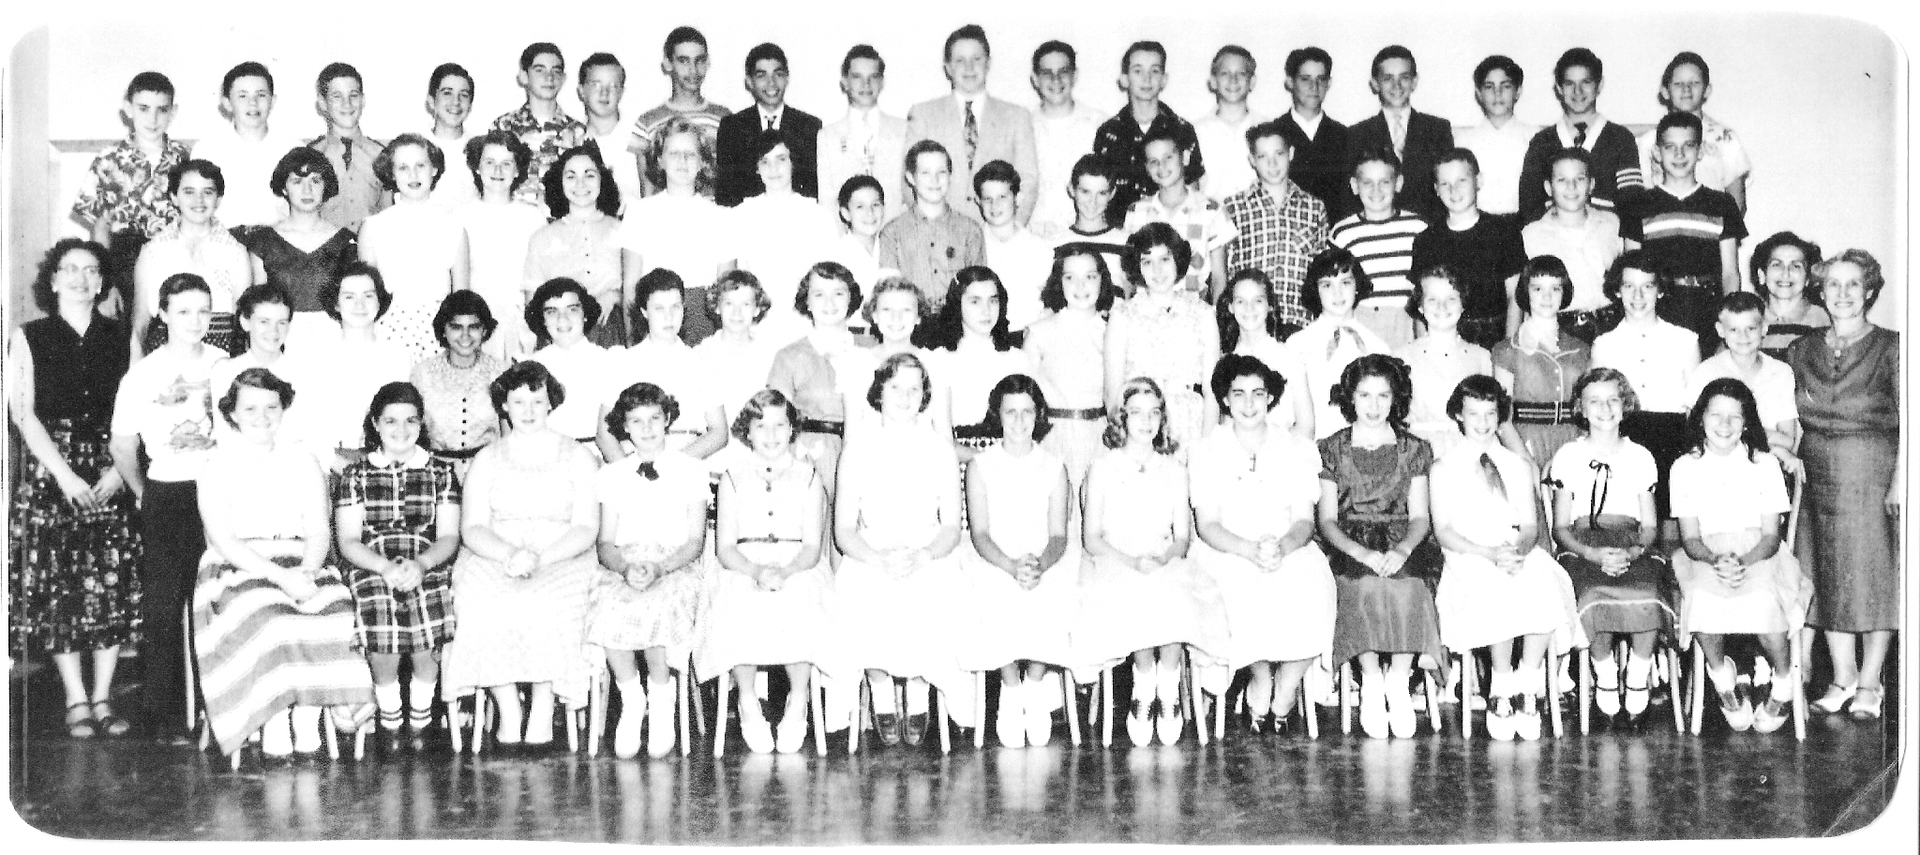 Annandale Elementary School 1953